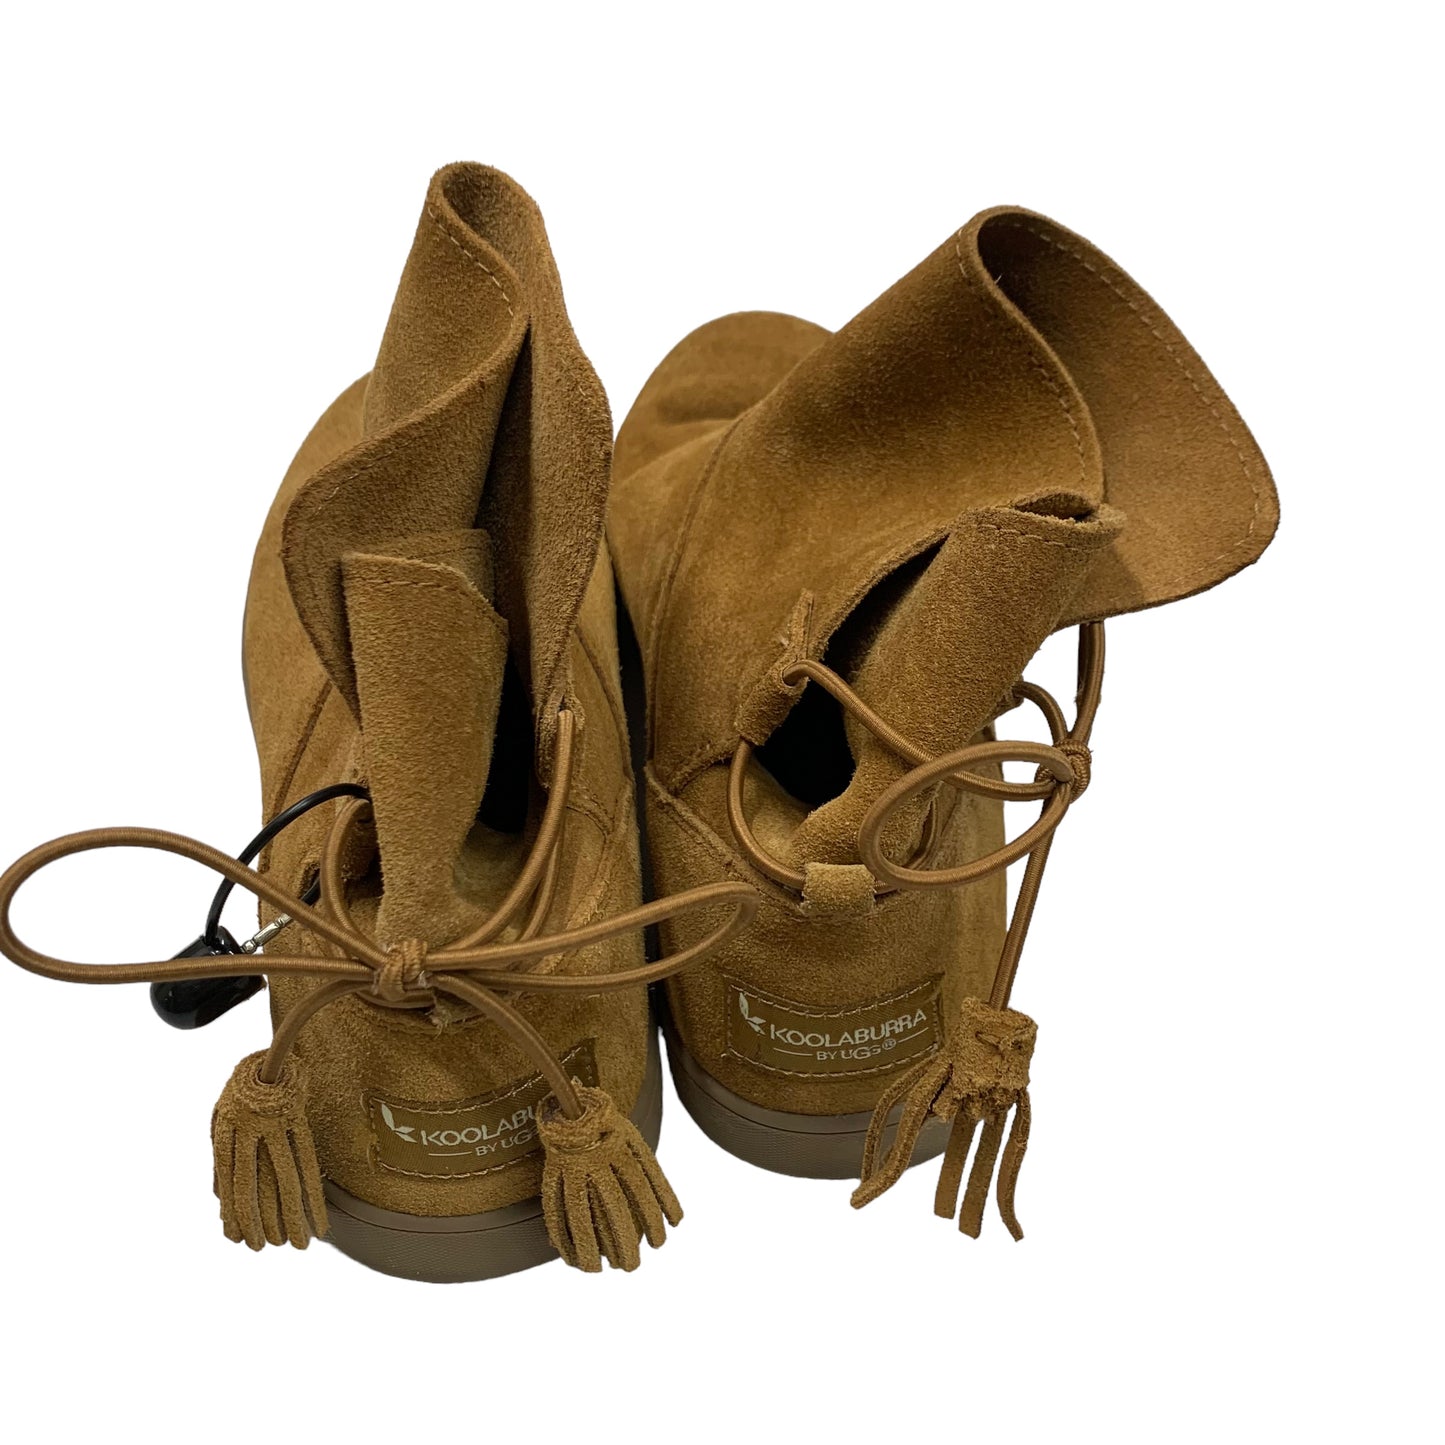 Boots Designer By Koolaburra By Ugg  Size: 7